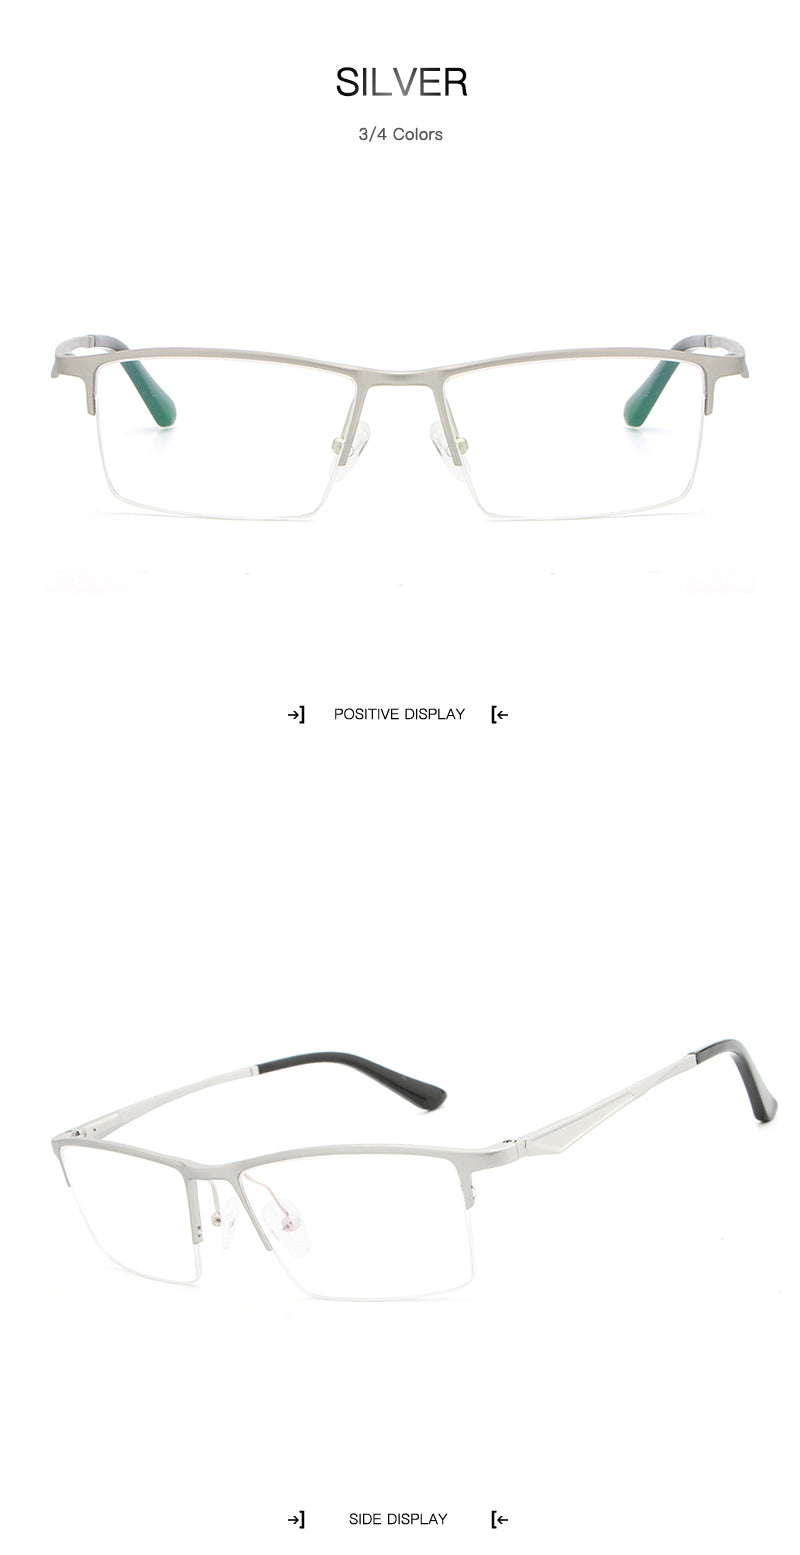 Hdcrafter Unisex Semi Rim Titanium Rectangular Square Frame Eyeglasses Lp6265 Semi Rim Hdcrafter Eyeglasses   